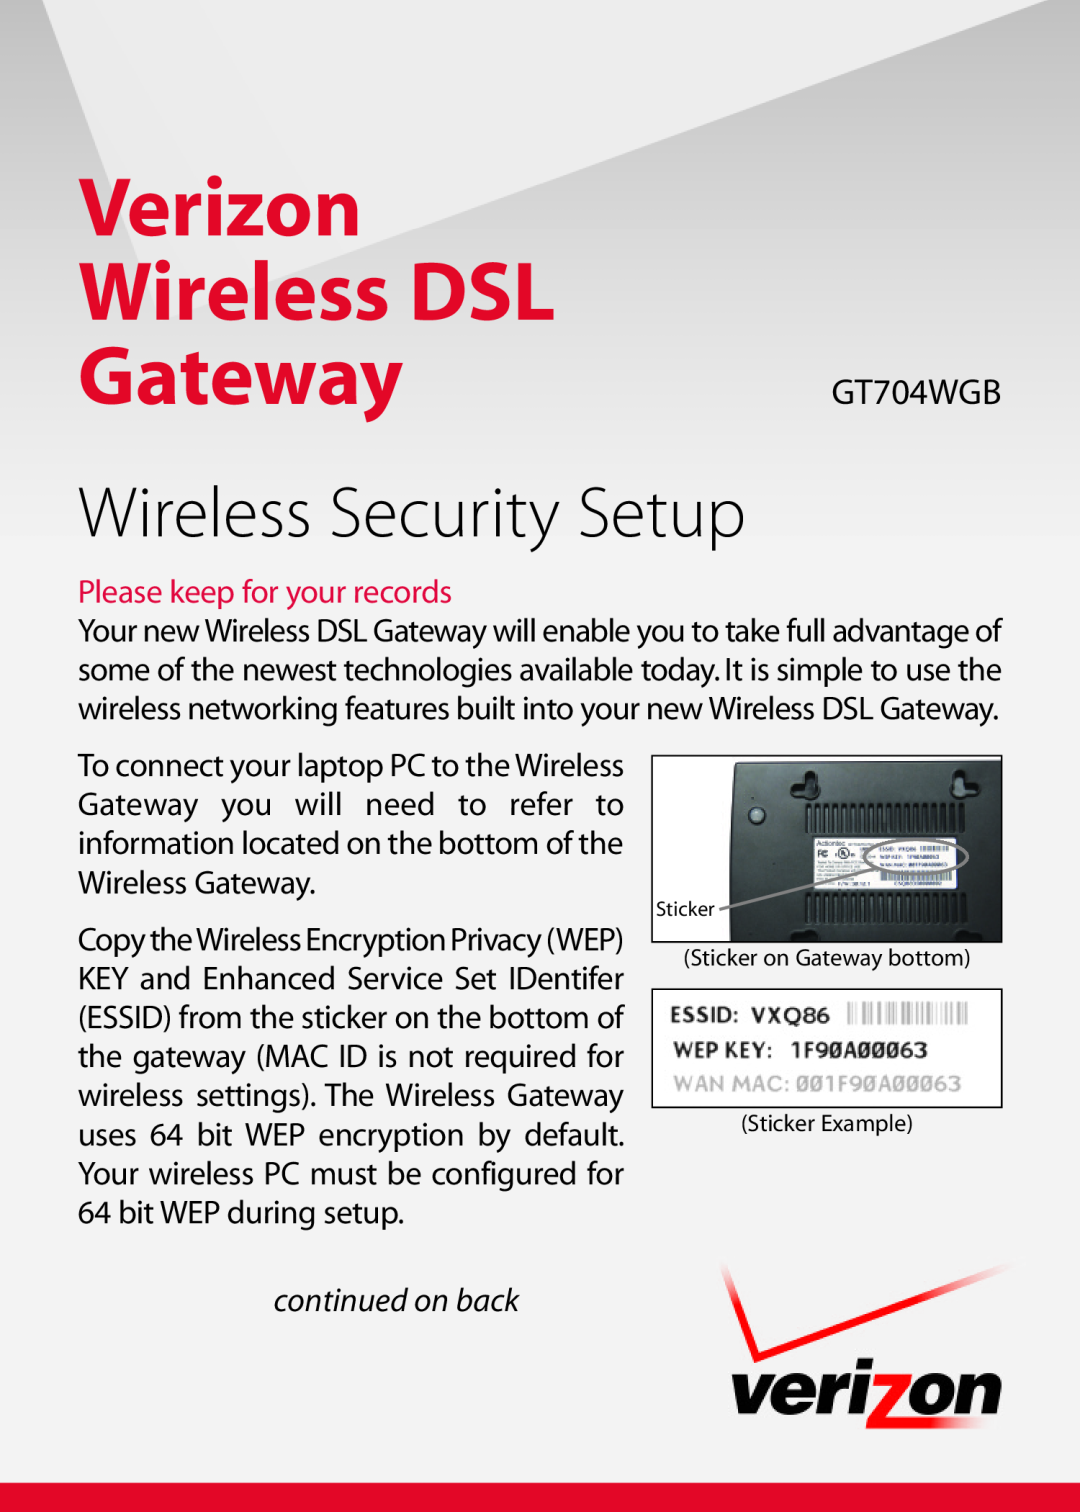 Gateway GT704WGB manual continued on back, Verizon Wireless DSL, Gateway, Wireless Security Setup 